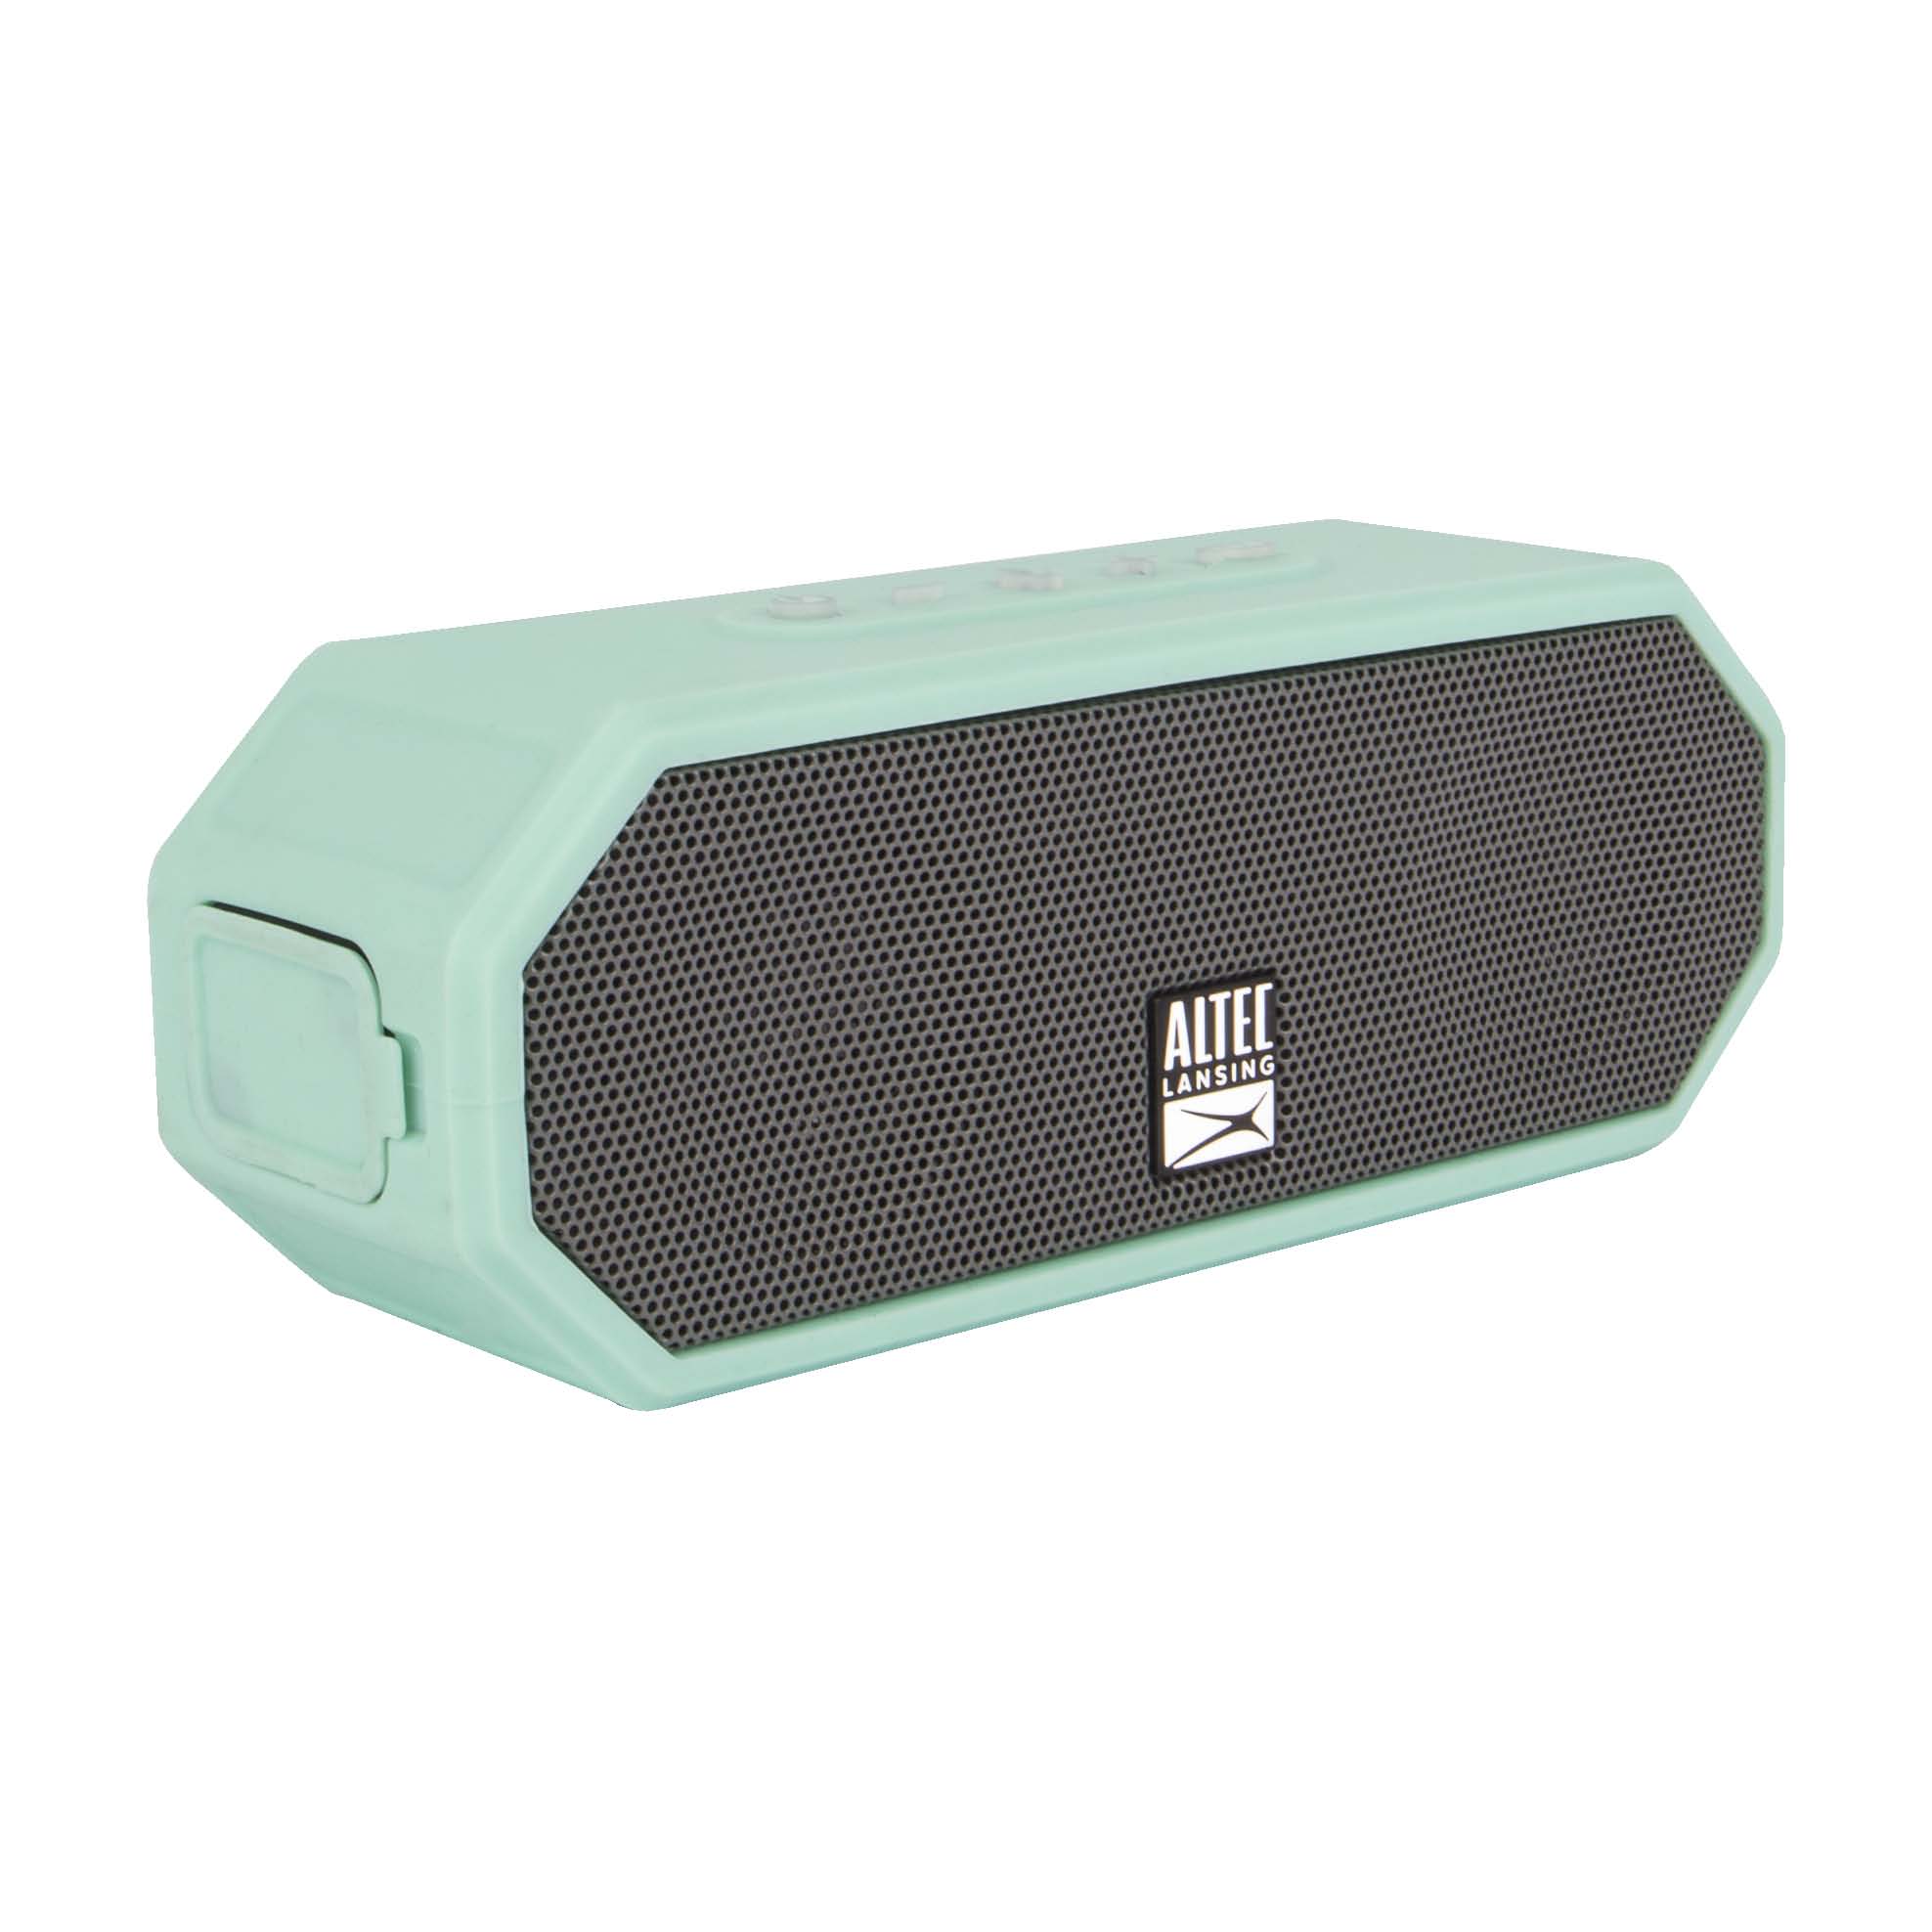 Altec Lansing Jacket H20 4 Bluetooth Speaker- Mint - image 5 of 5